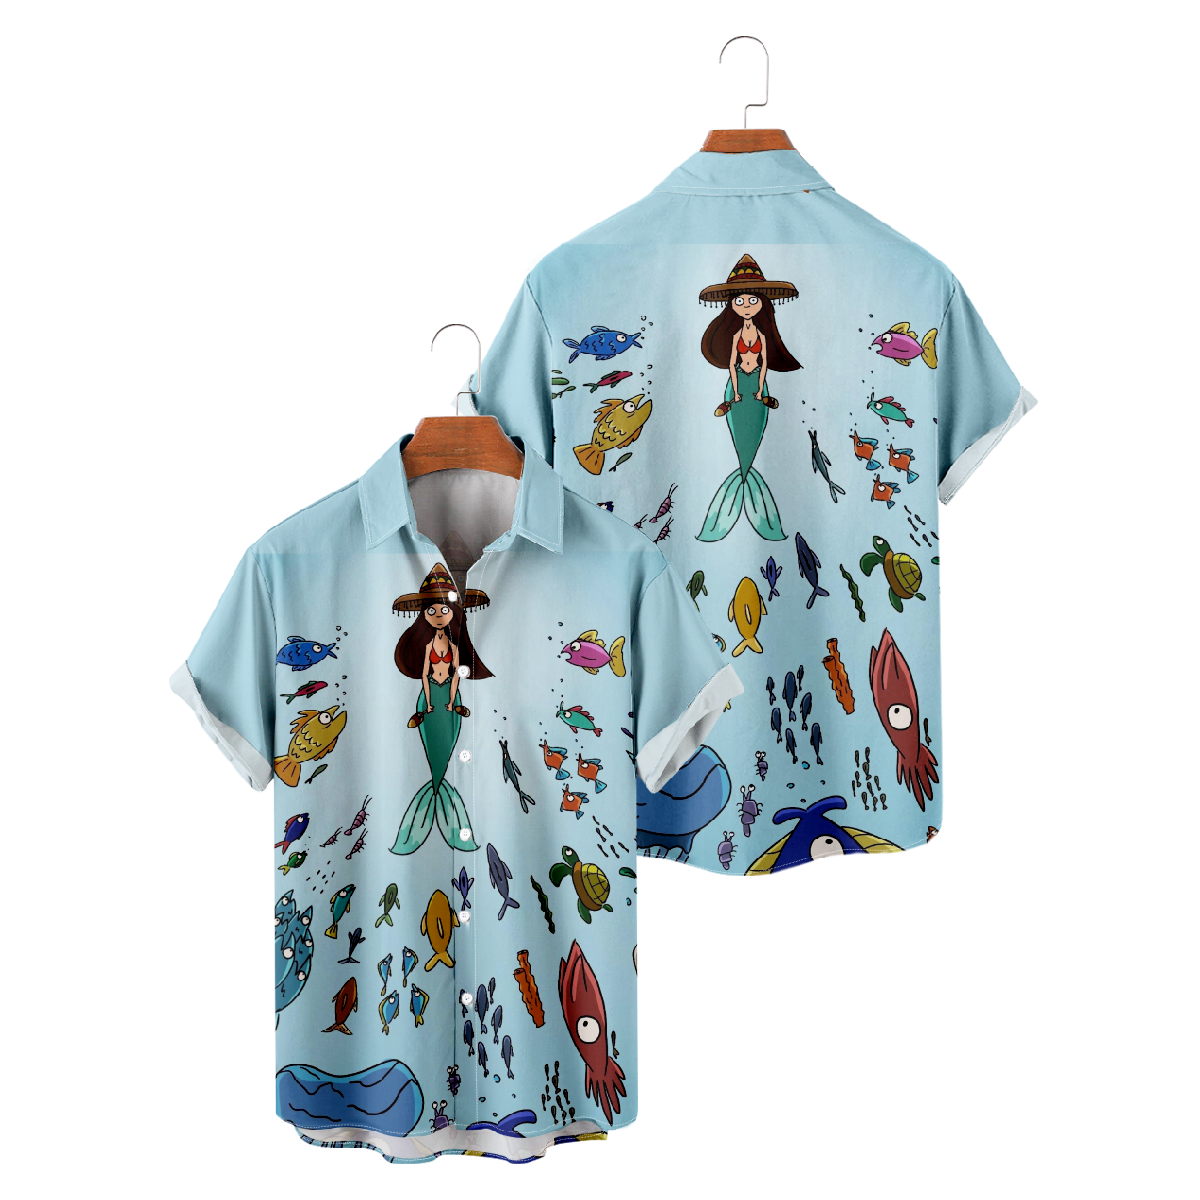 Mermaid Print Short Sleeve Shirt Men's Straight Collar Button Shirt Summer Tops